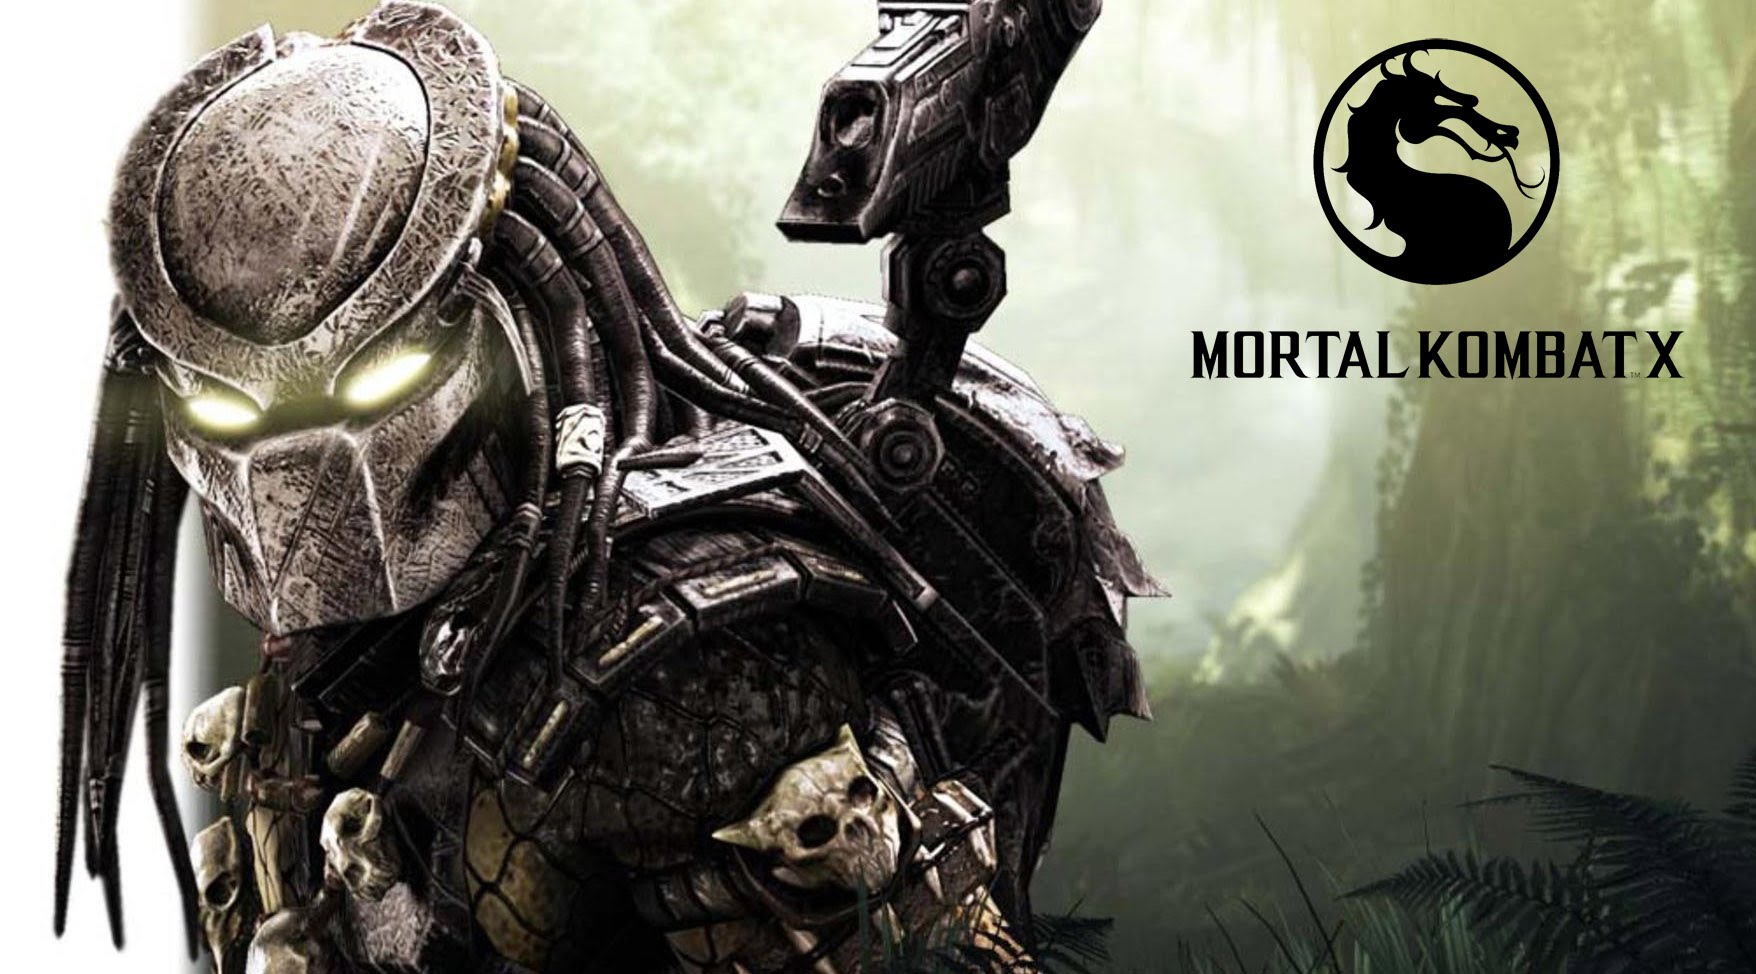 “Mortal Kombat X” releases official trailer for The Predator